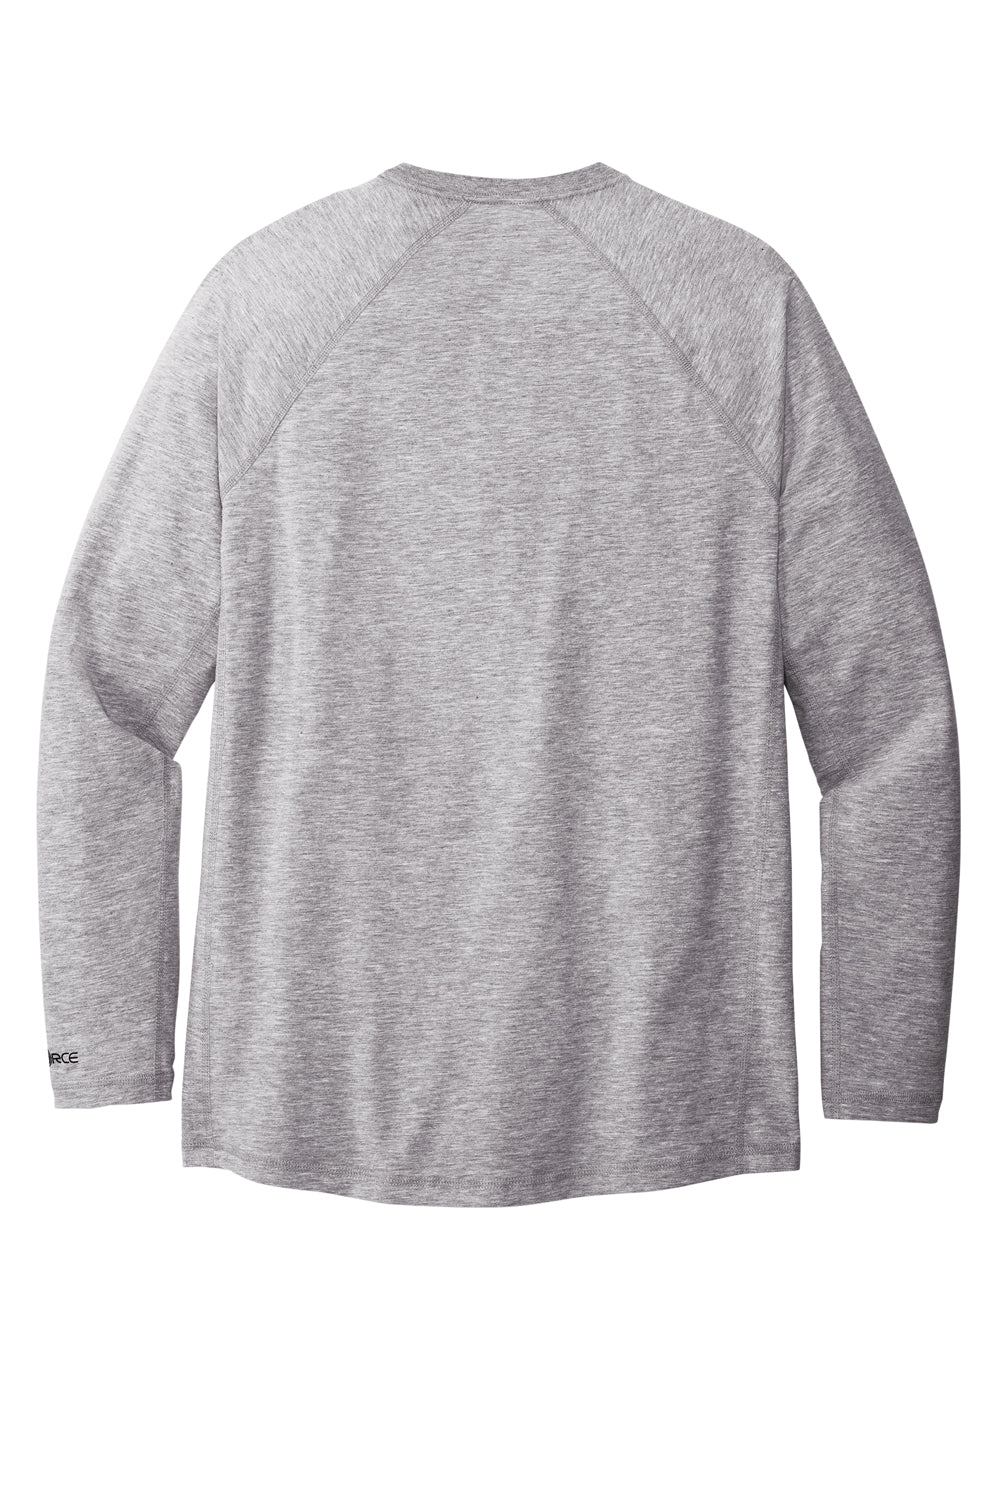 Carhartt CT104617 Mens Force Moisture Wicking Long Sleeve Crewneck T-Shirt w/ Pocket Heather Grey Flat Back